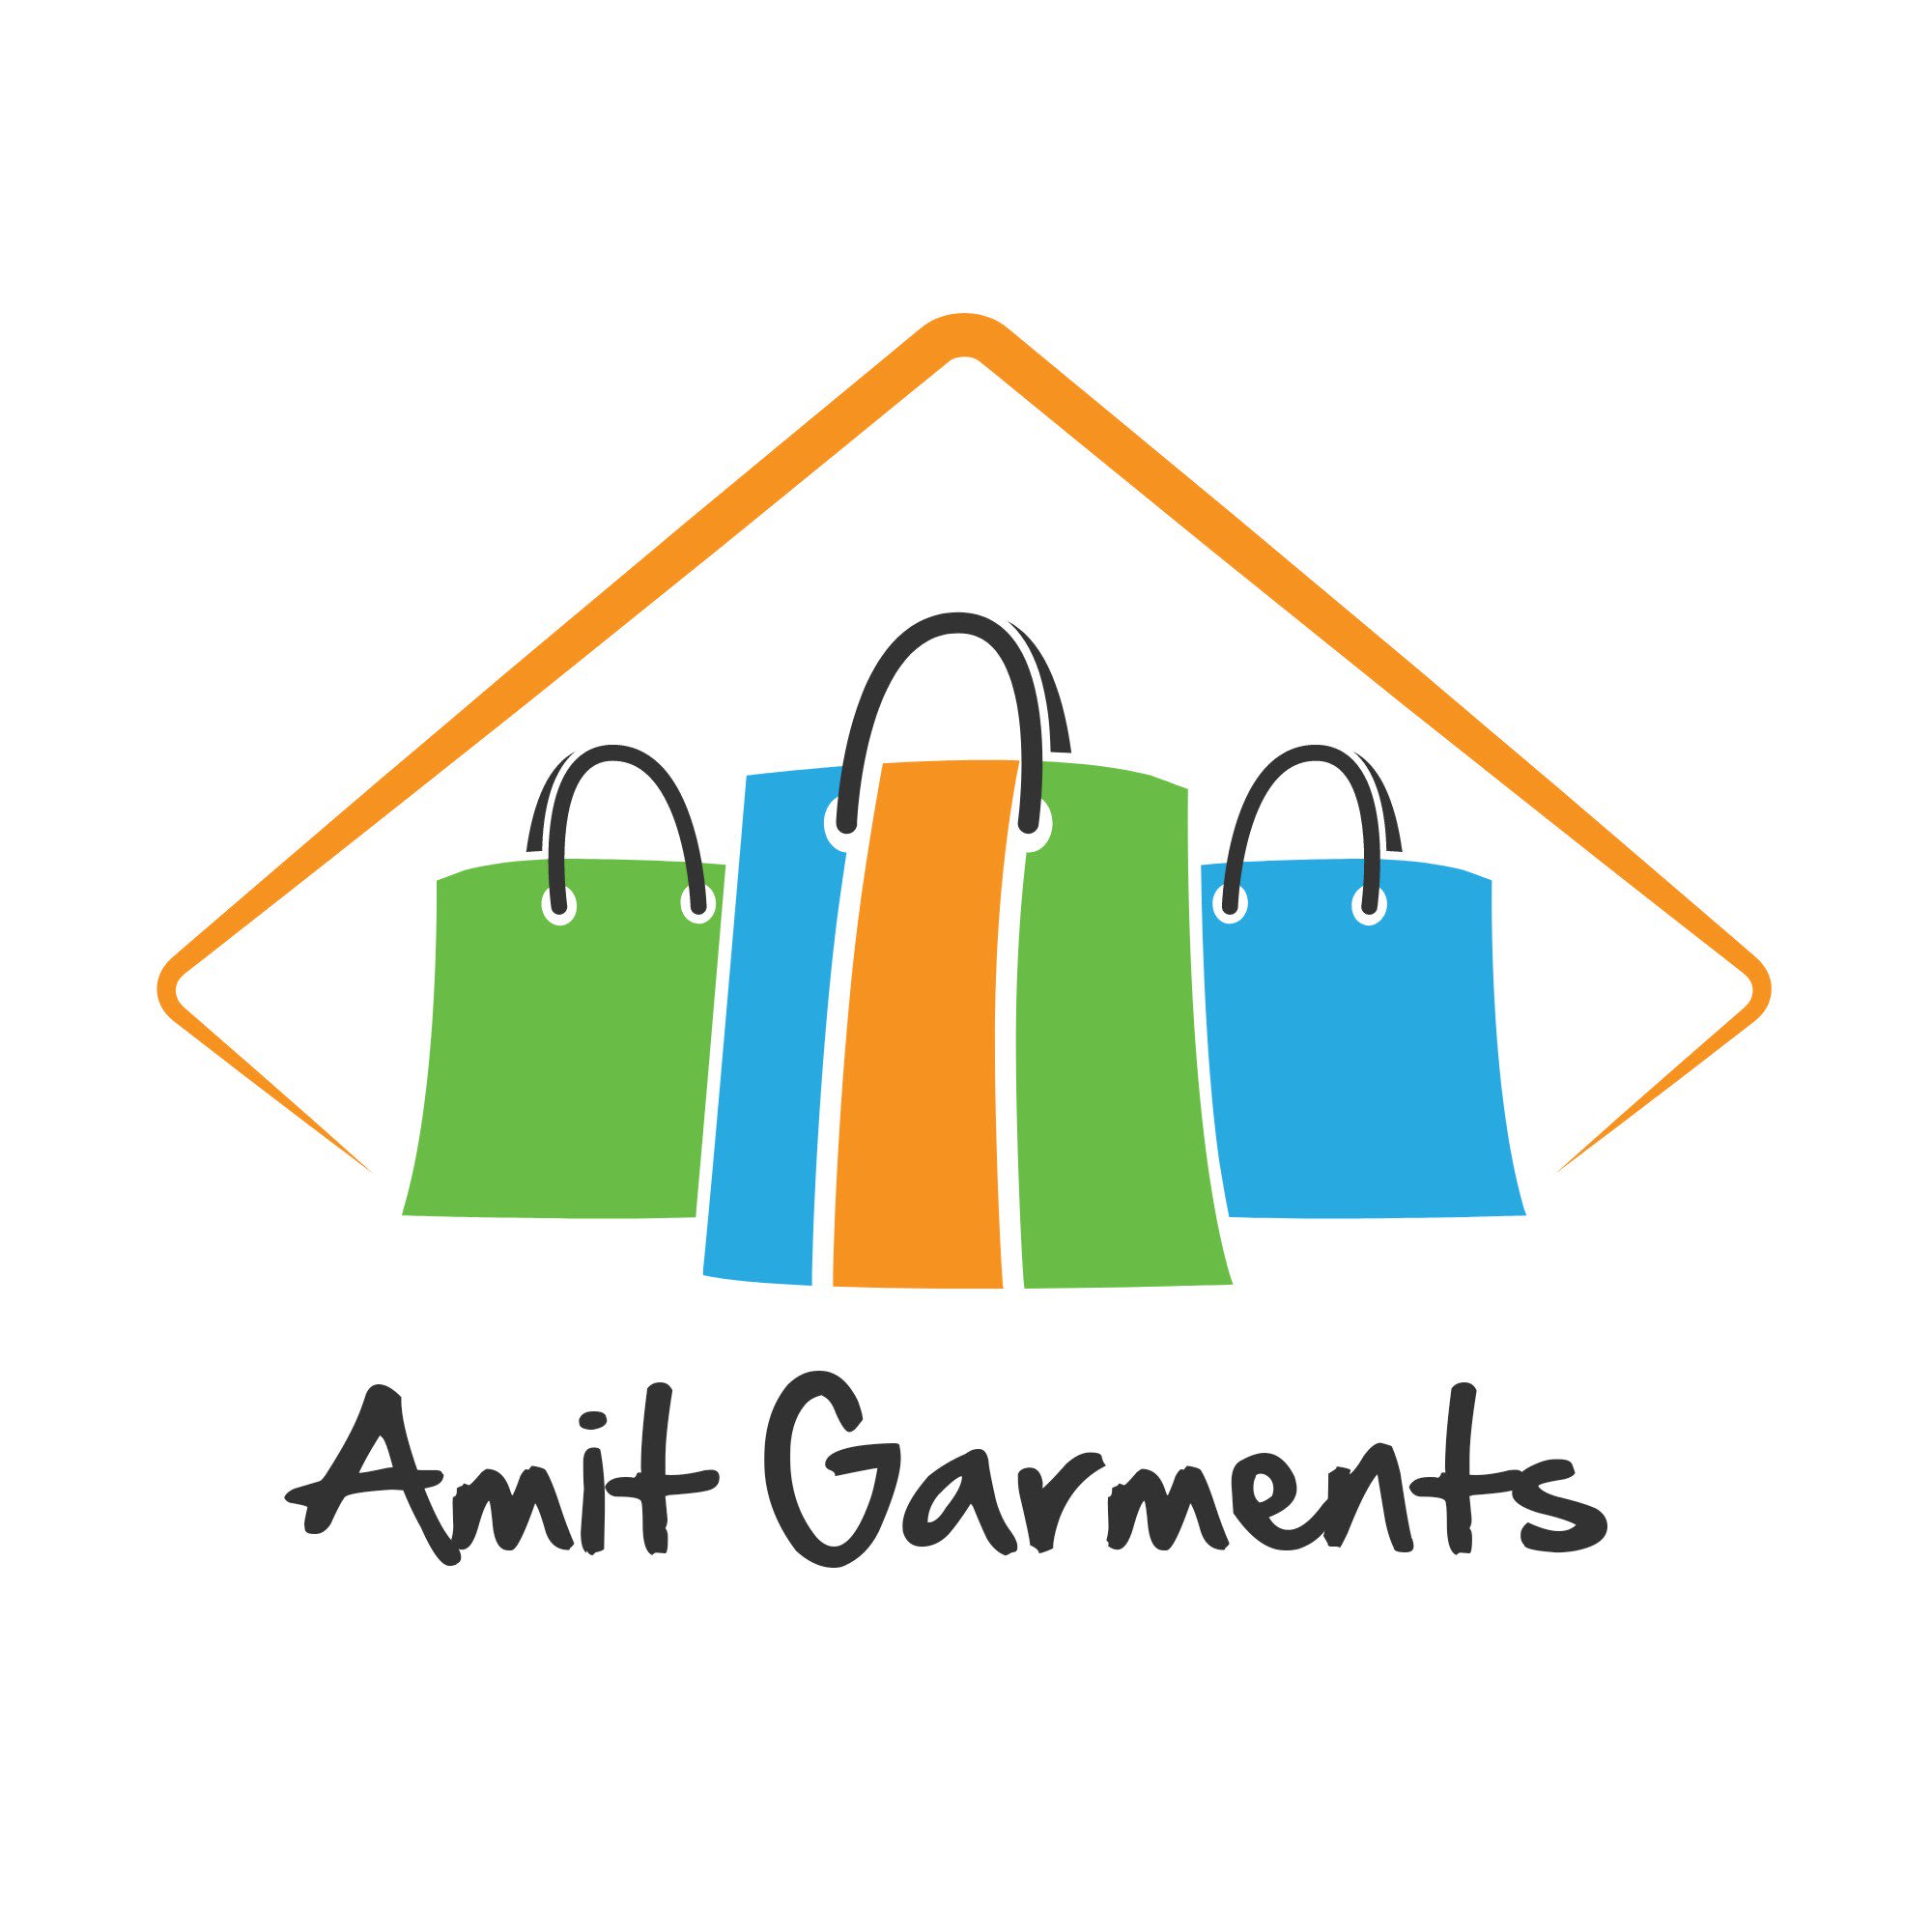 Amit Garments